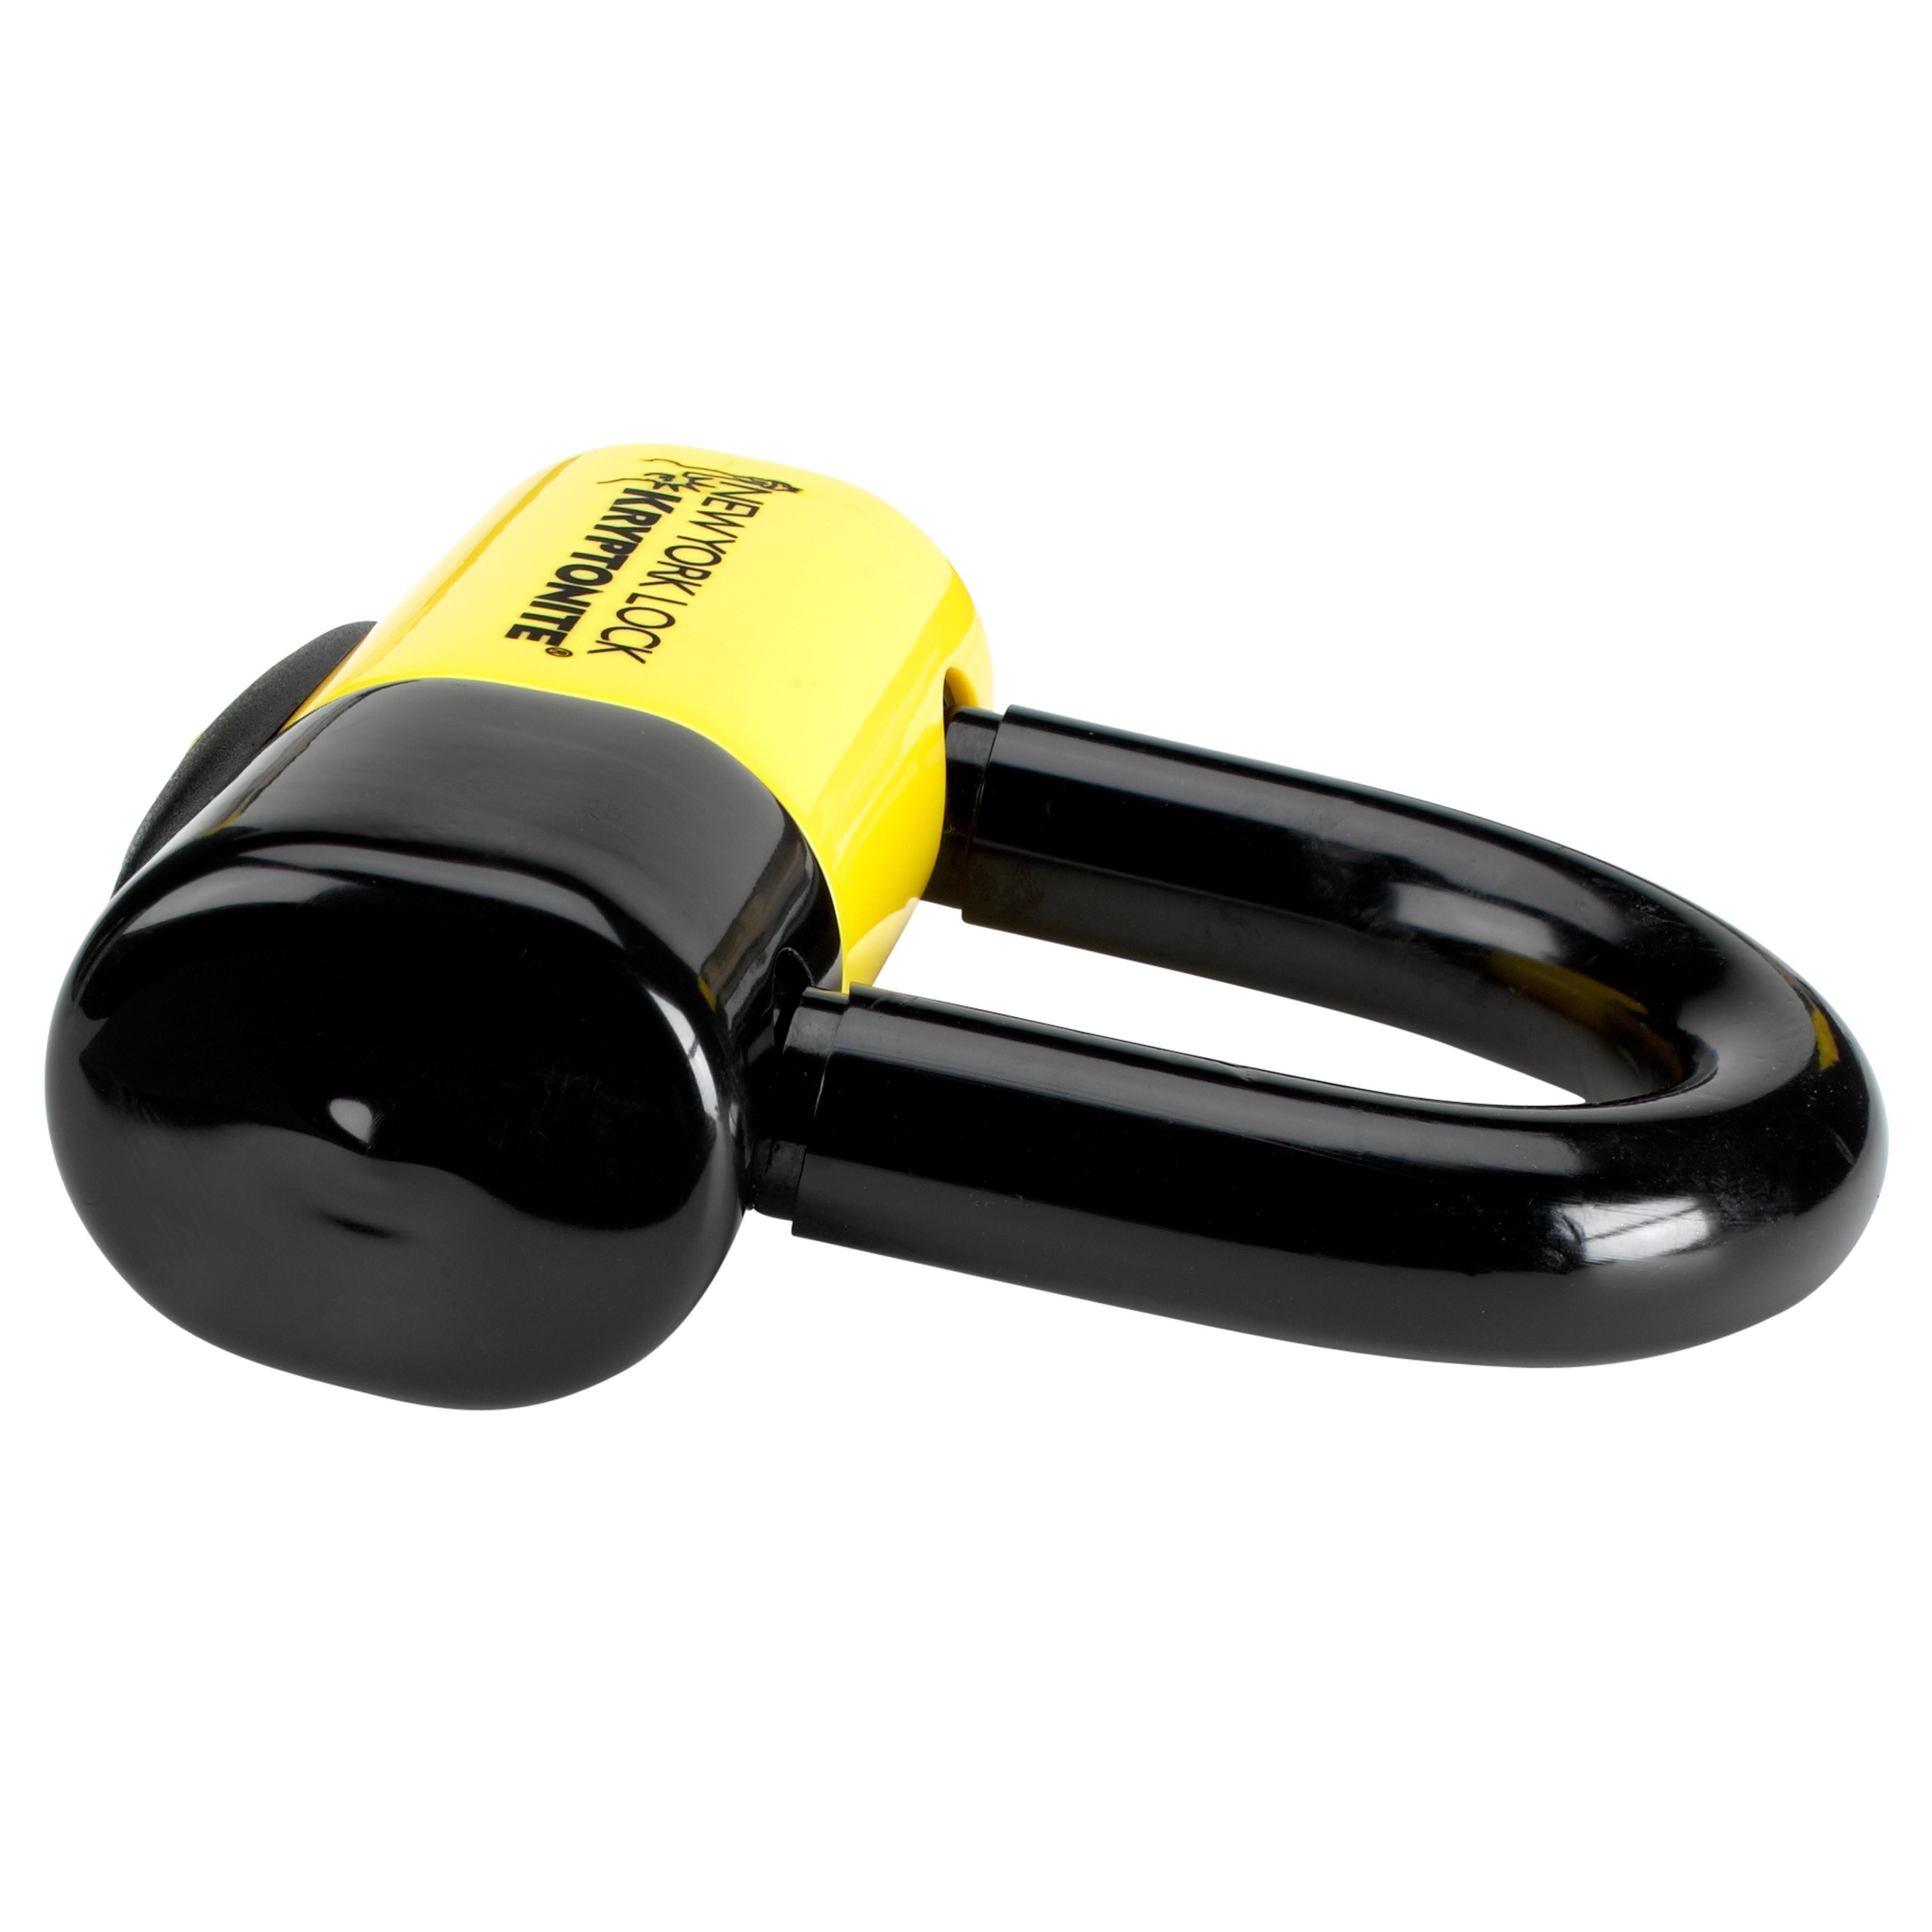 Kryptonite 998457 New York Disc Lock 14mm Yellow/Black Bike Bicycle Lock